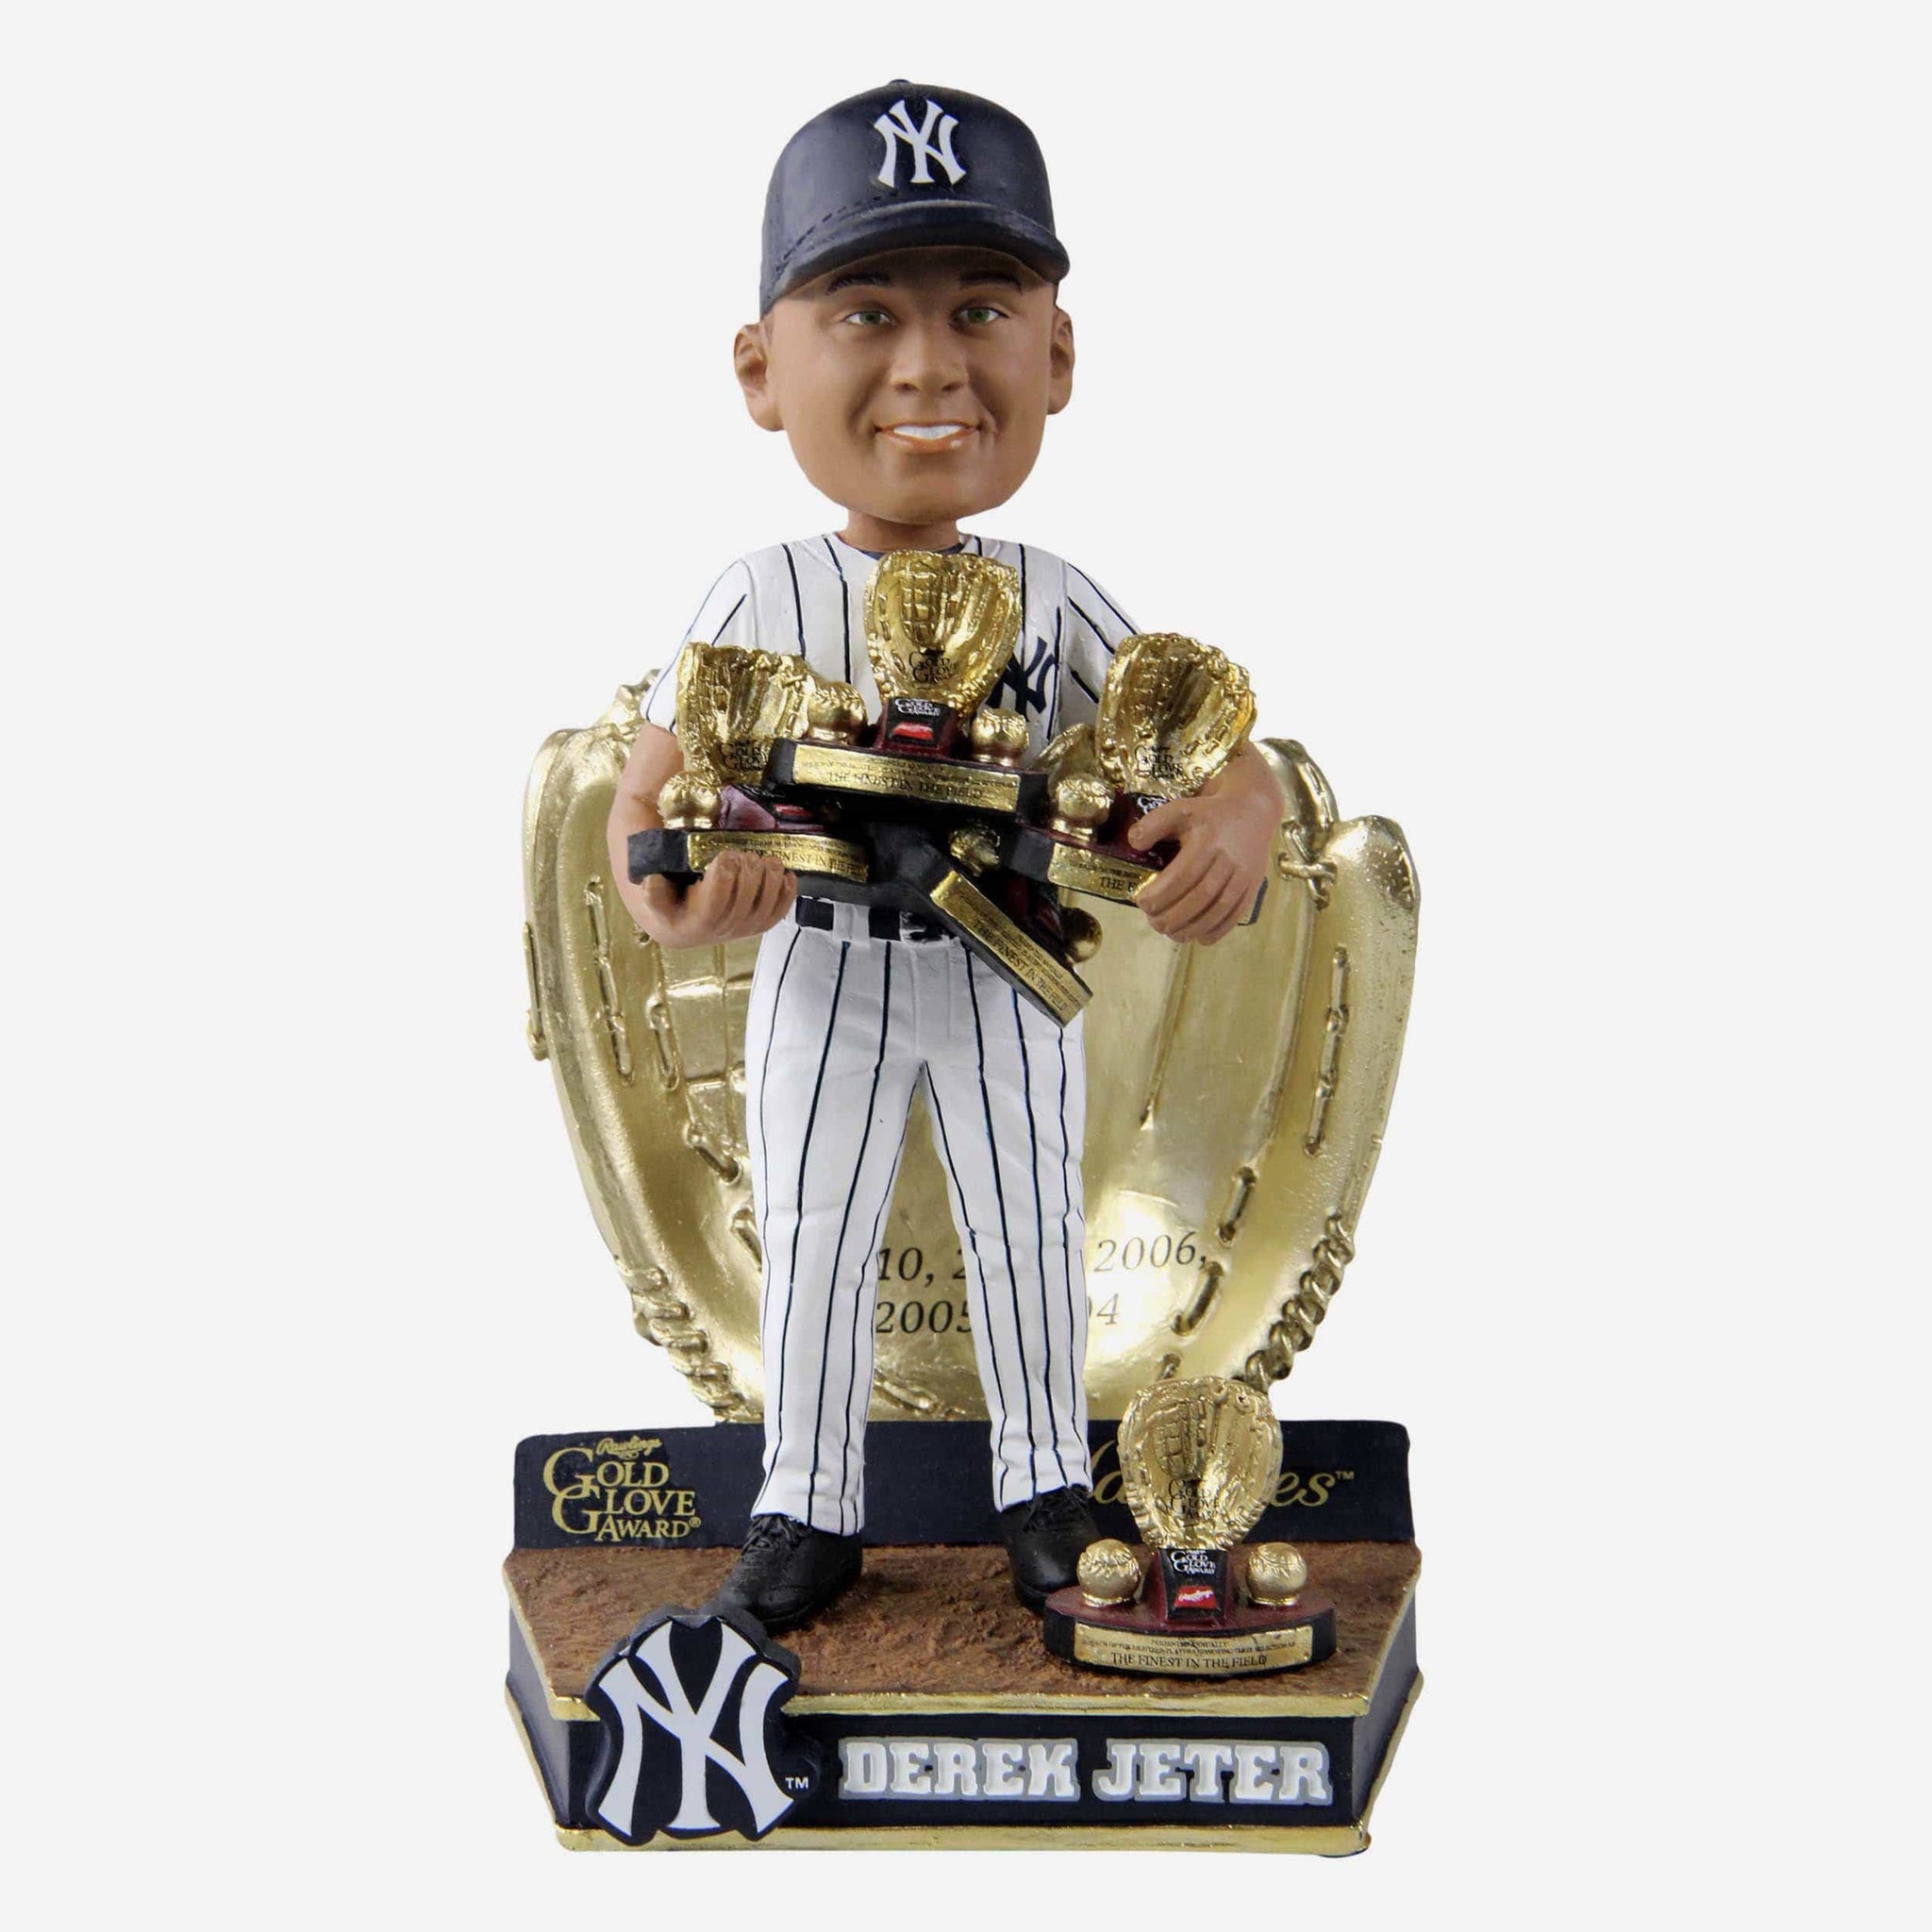 Derek Jeter New York Yankees 5X Gold Glove Award Bobblehead FOCO